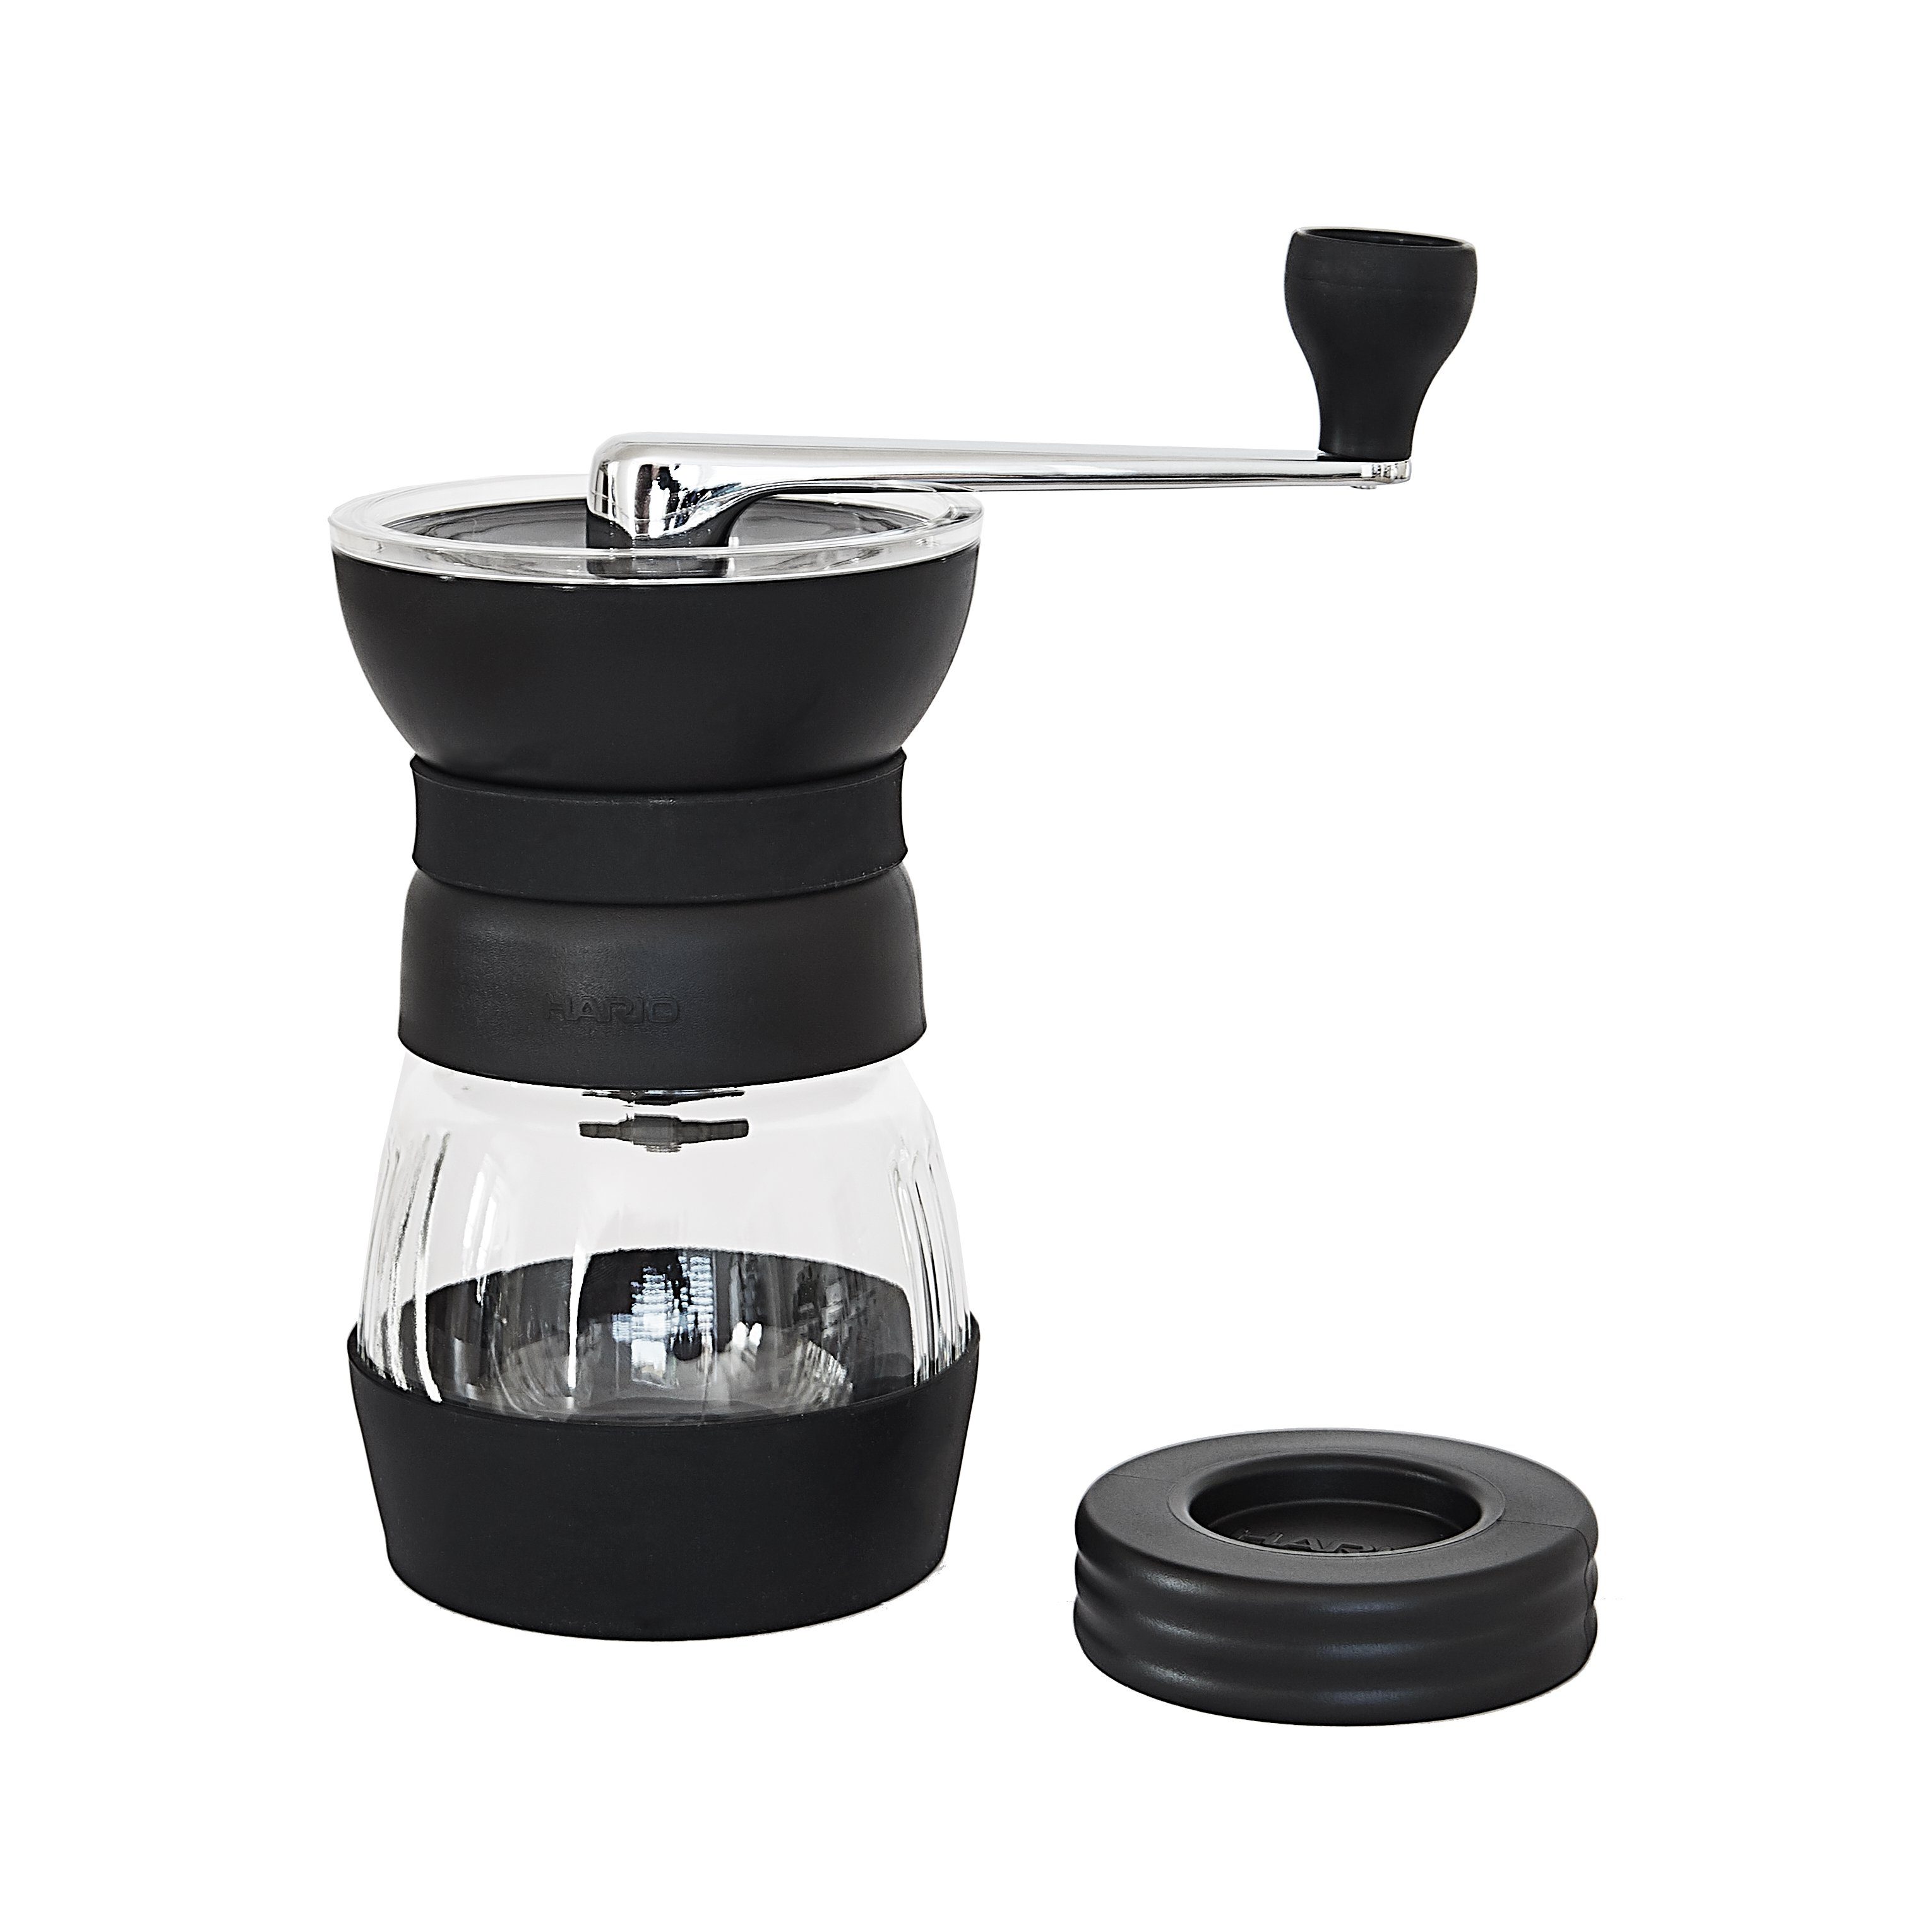 Hario Kaffeemühle Skerton Pro, Keramik-Kegelmahlwerk, 70,00 g Bohnenbehälter, Profi-Handmühle